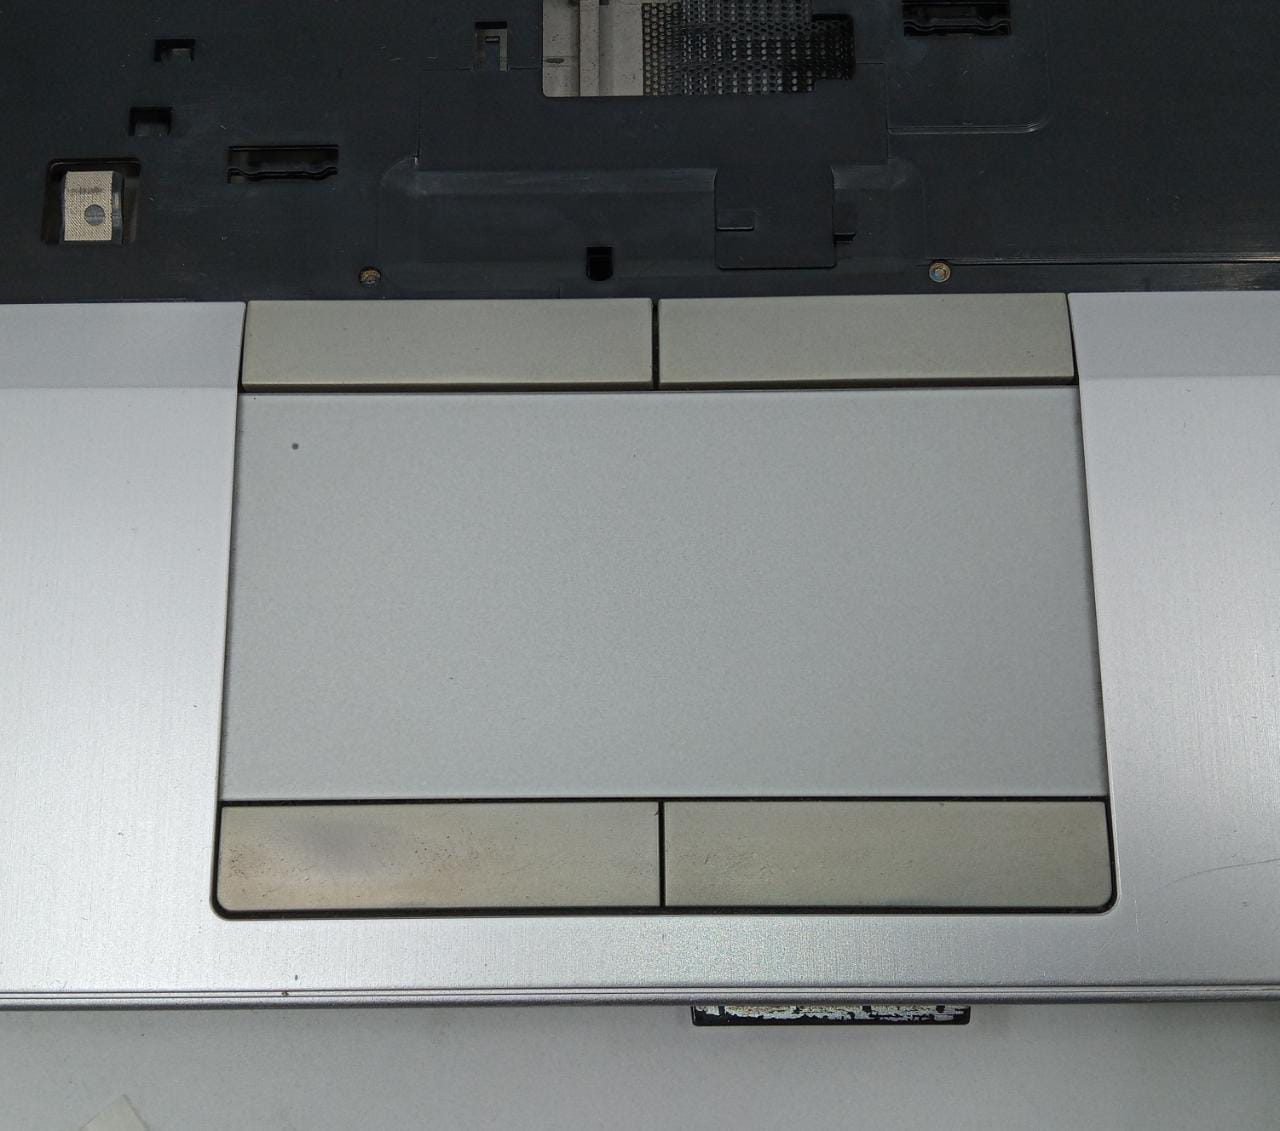 Carcasa Base Superior-Inferior, Palmrest, Touchpad y Tapa trasera de Laptop Hp Elitebook 8470p (Producto Usado)